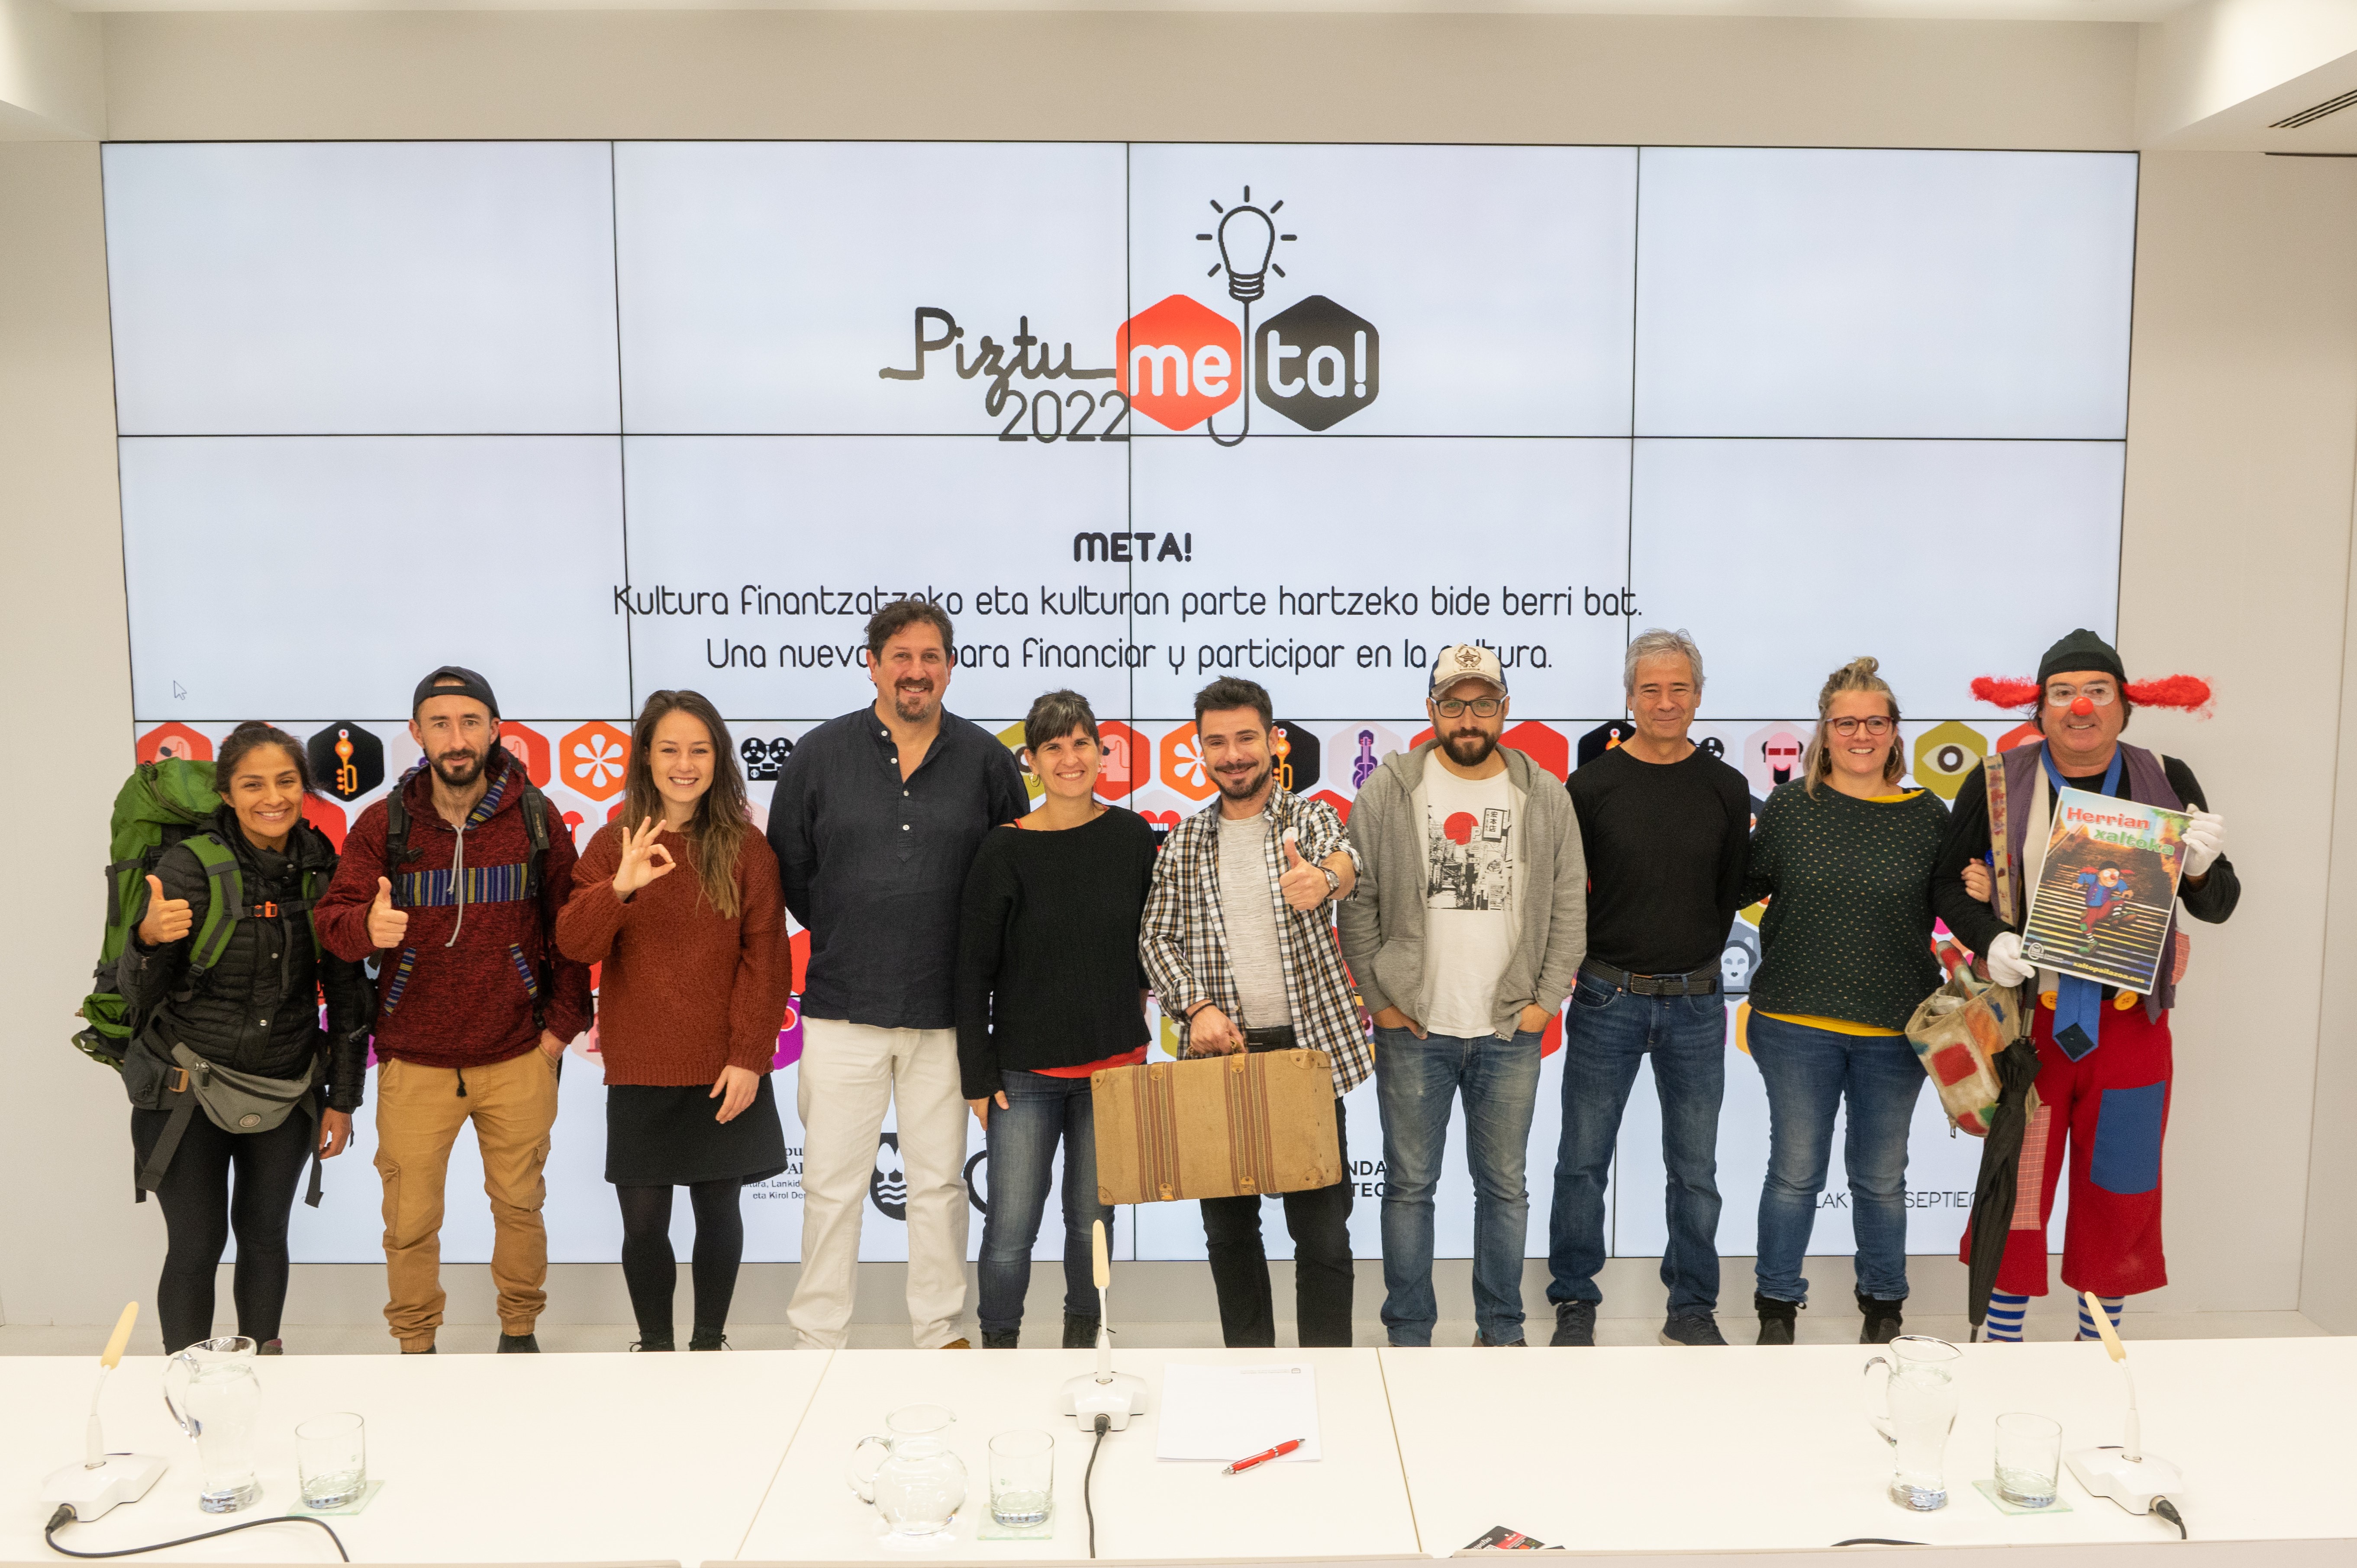 Piztu META! 2022 lanza su campaña de crowdfunding para impulsar 15 proyectos culturales en Gipuzkoa...